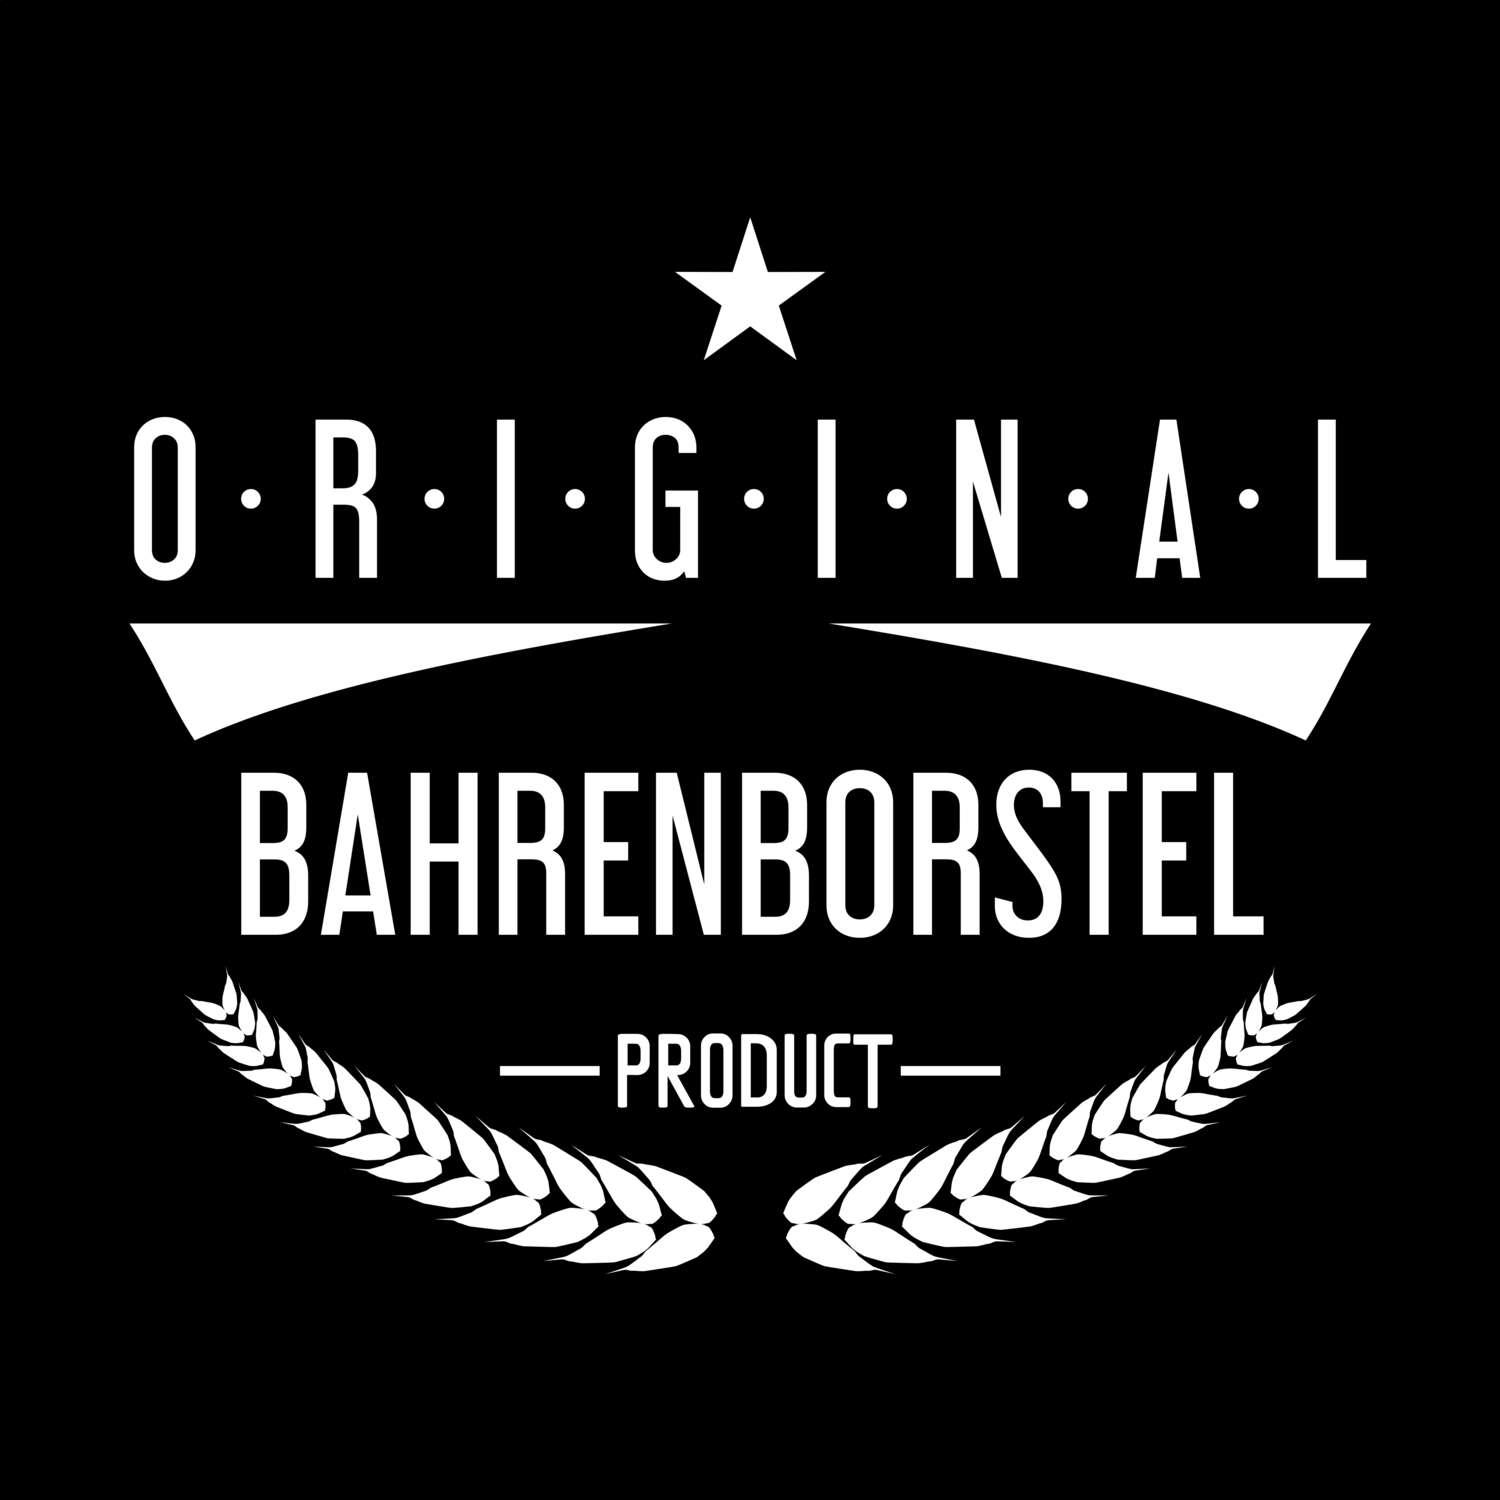 Bahrenborstel T-Shirt »Original Product«